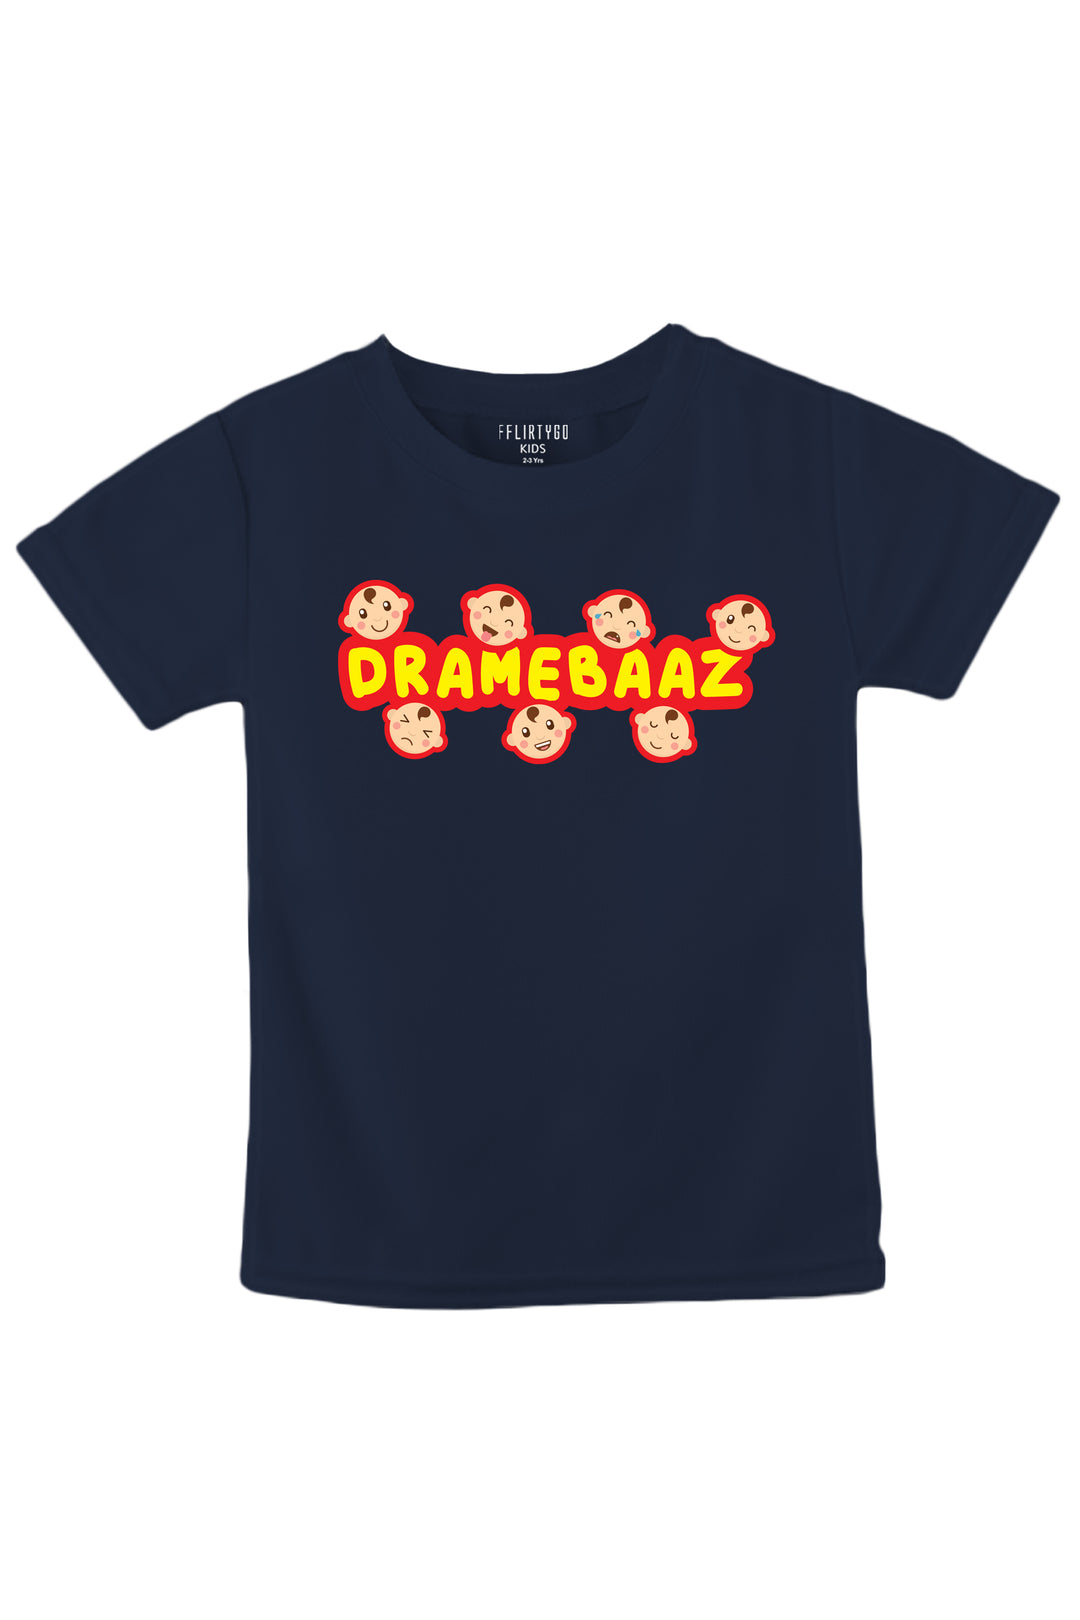 DrameBaaz